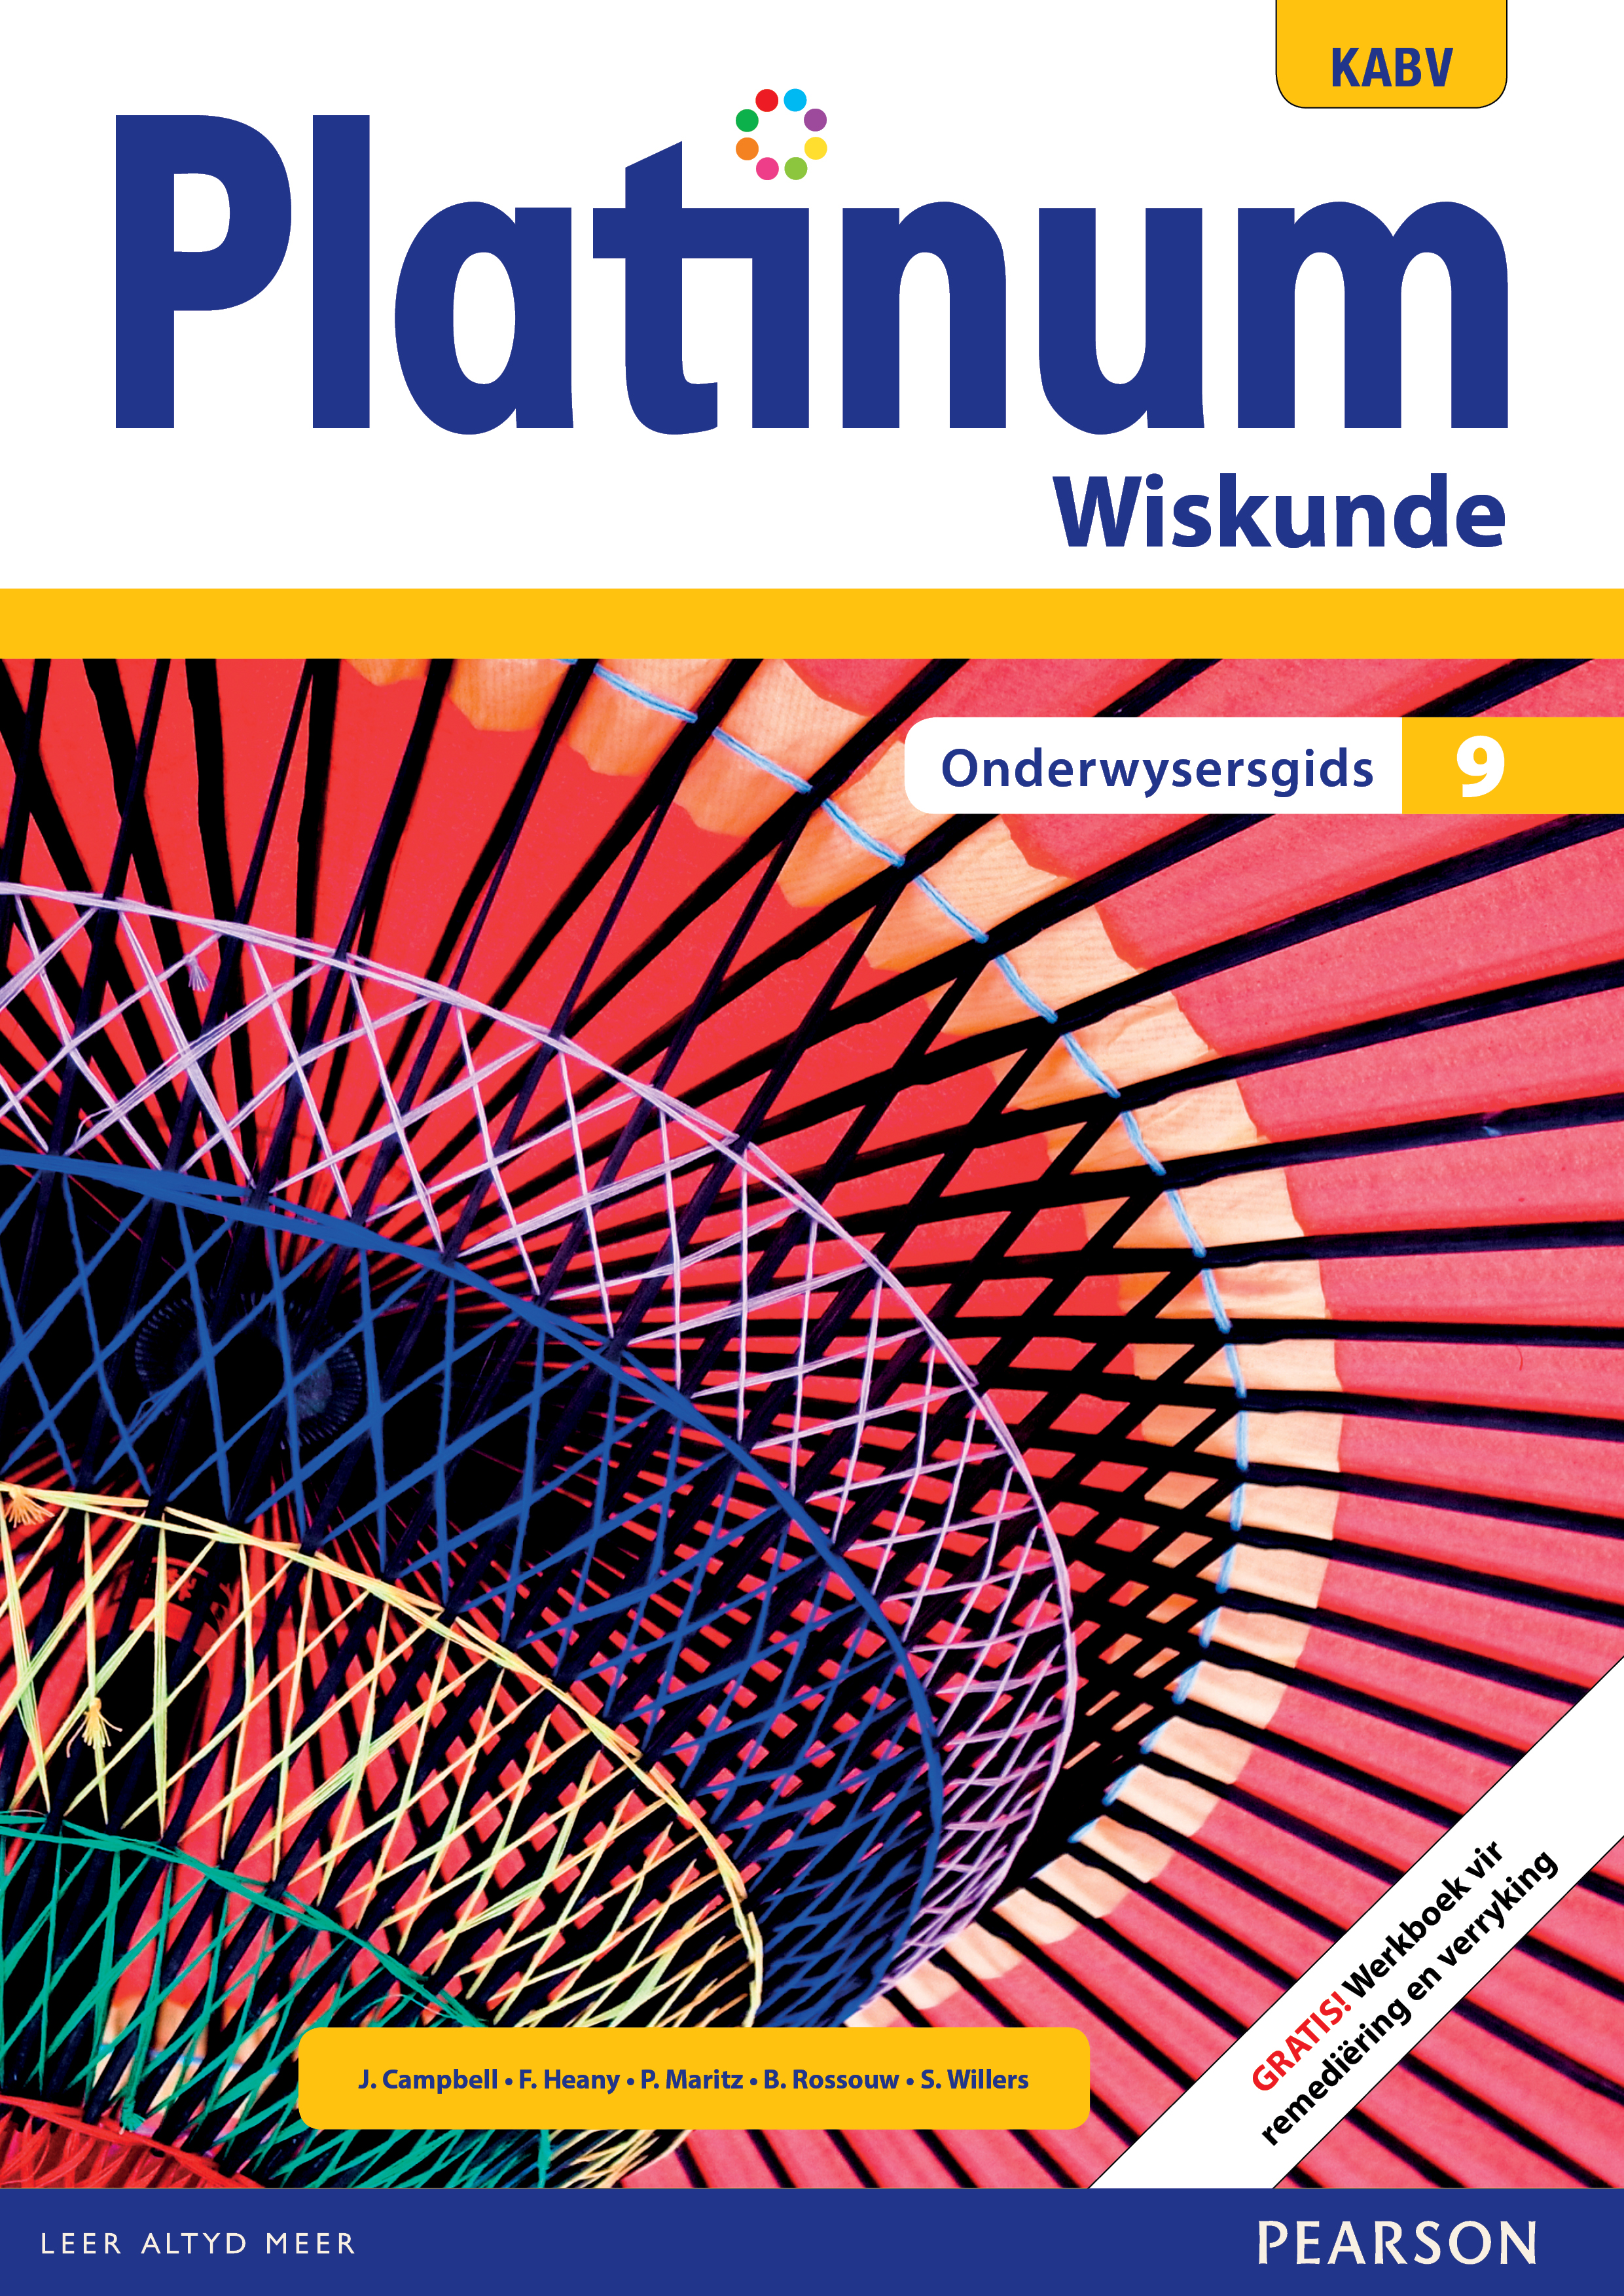 Picture of Platinum wiskunde KABV